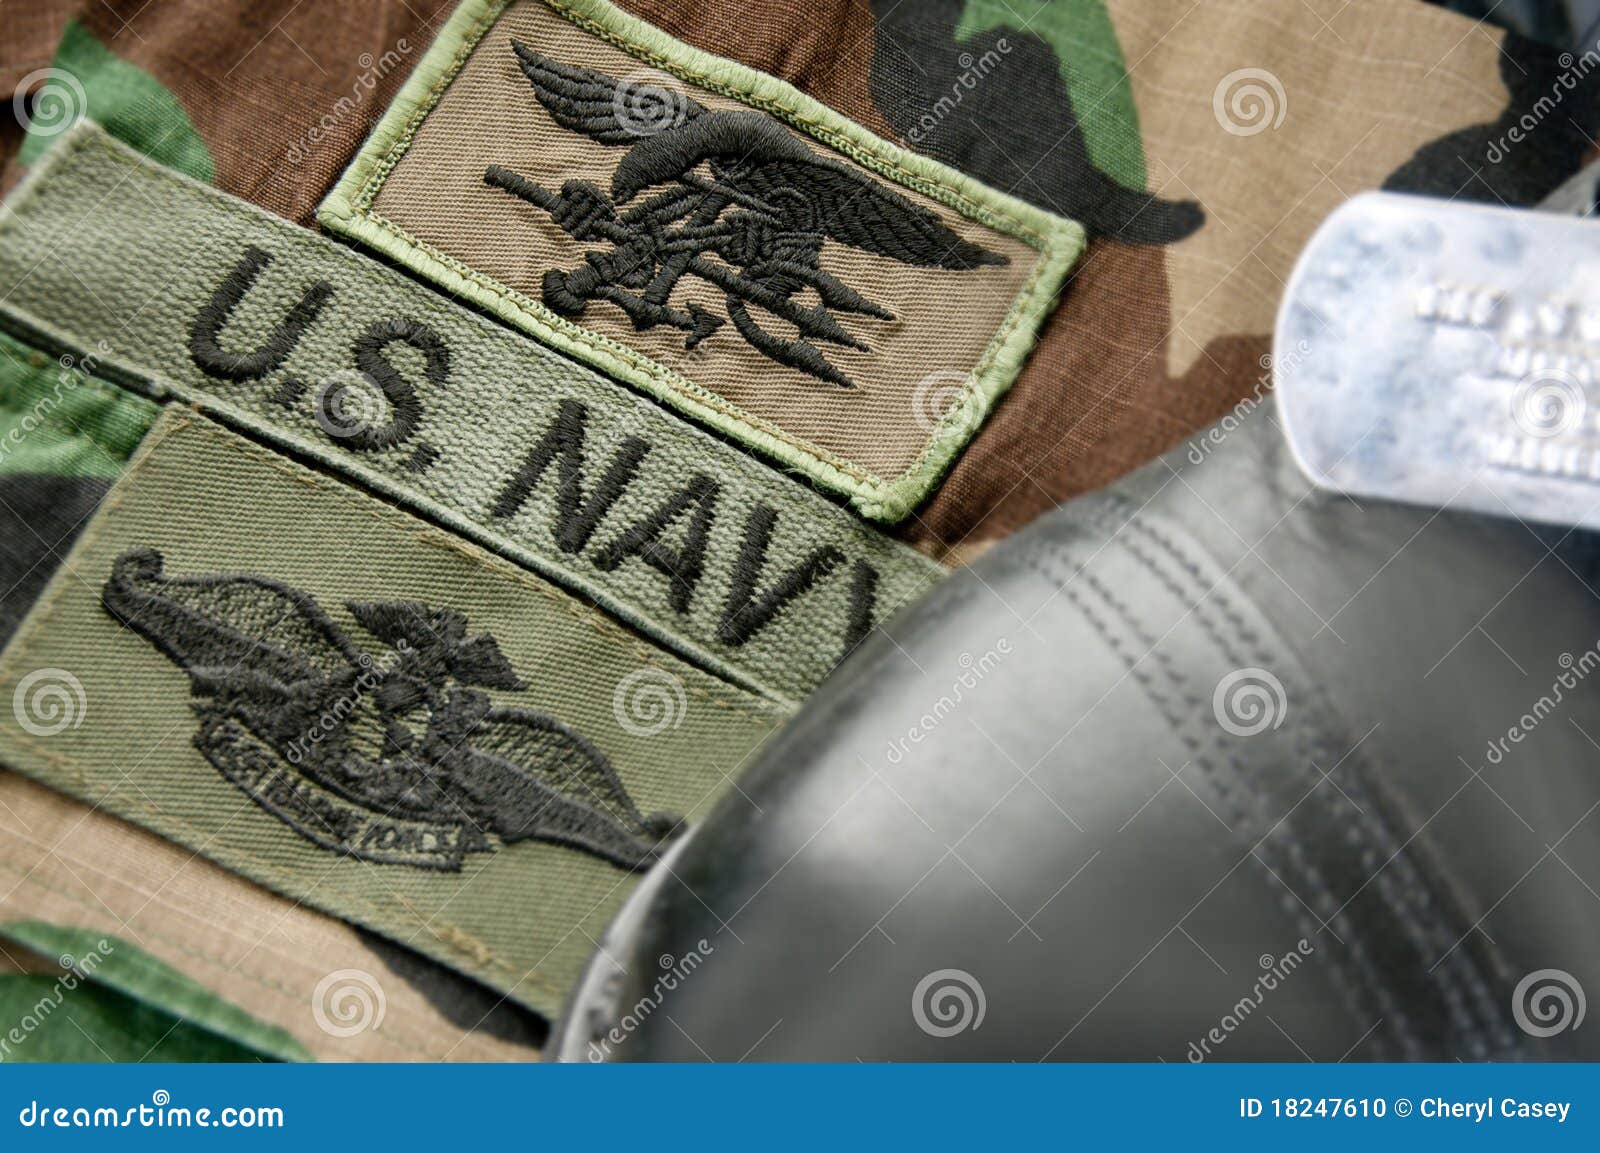 uniform of navy seal